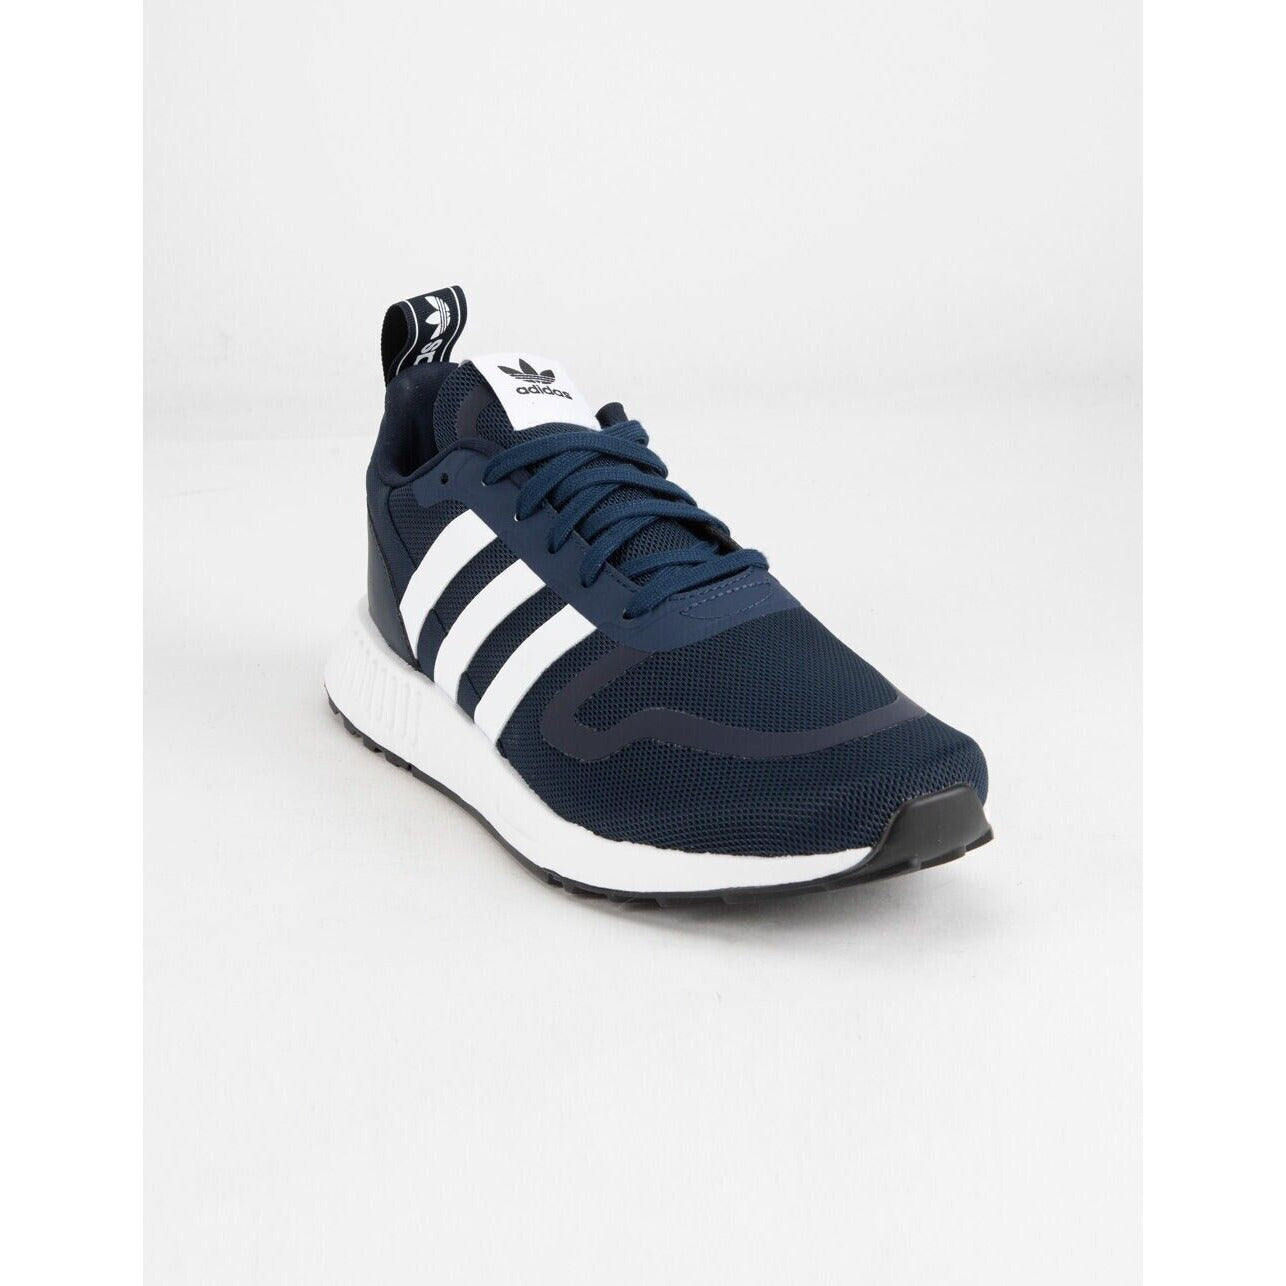 Adidas Multix Men’s Athletic Trainer Blue Sneaker Running Training Shoe